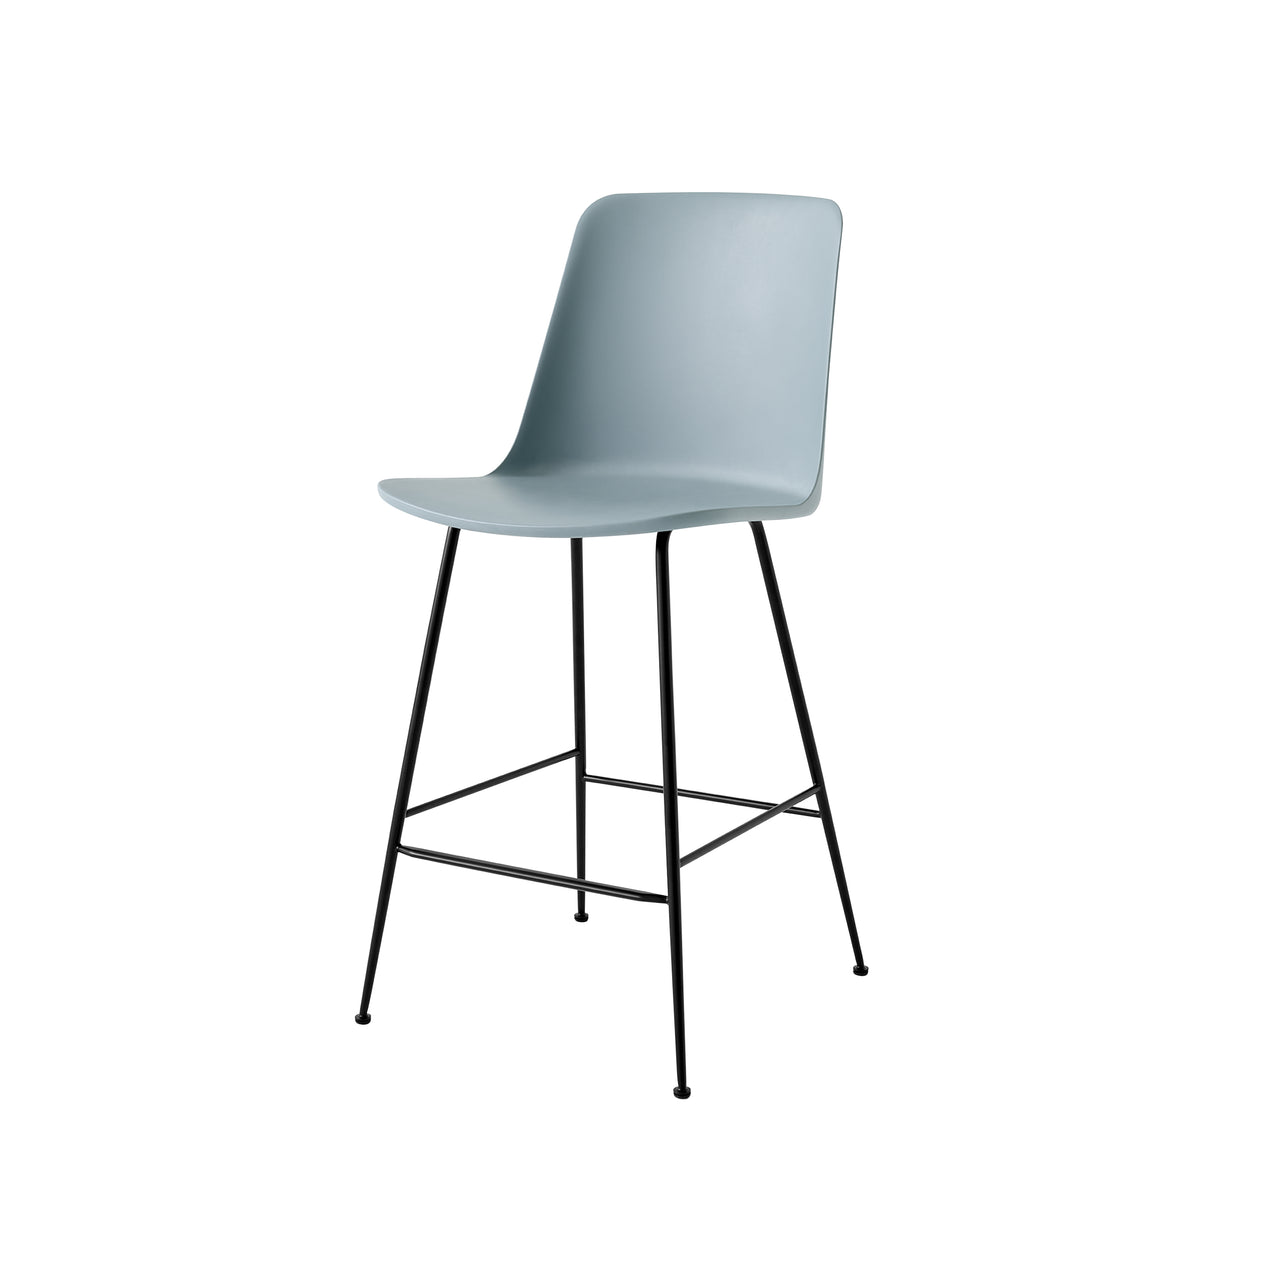 Rely Bar + Counter Highback Chair: HW91 + HW96 + Counter (HW91) + Light Blue + Black